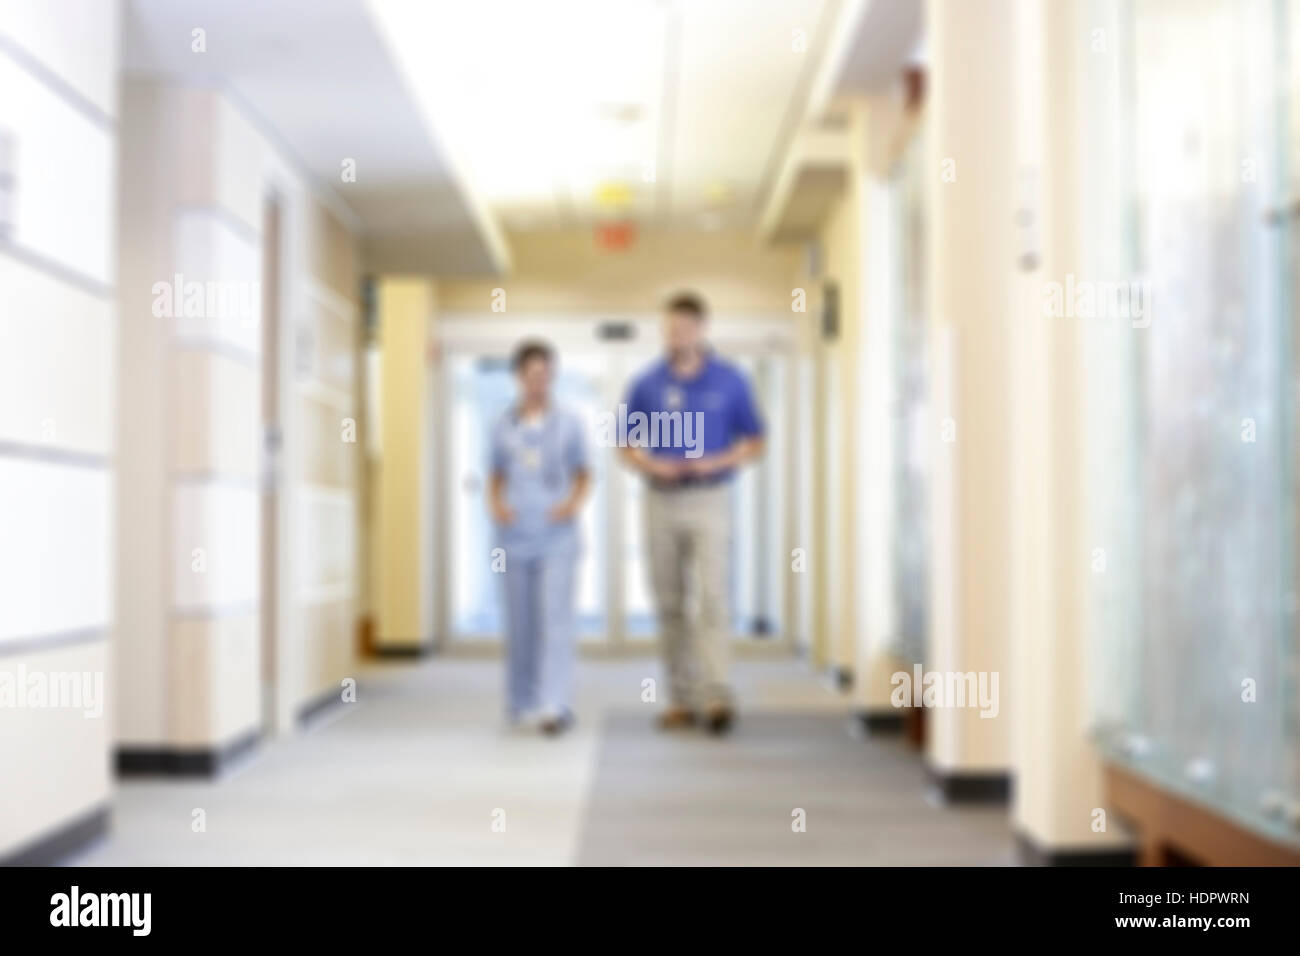 Blurred Hospital Hallway with Caregivers walking Stock Photo